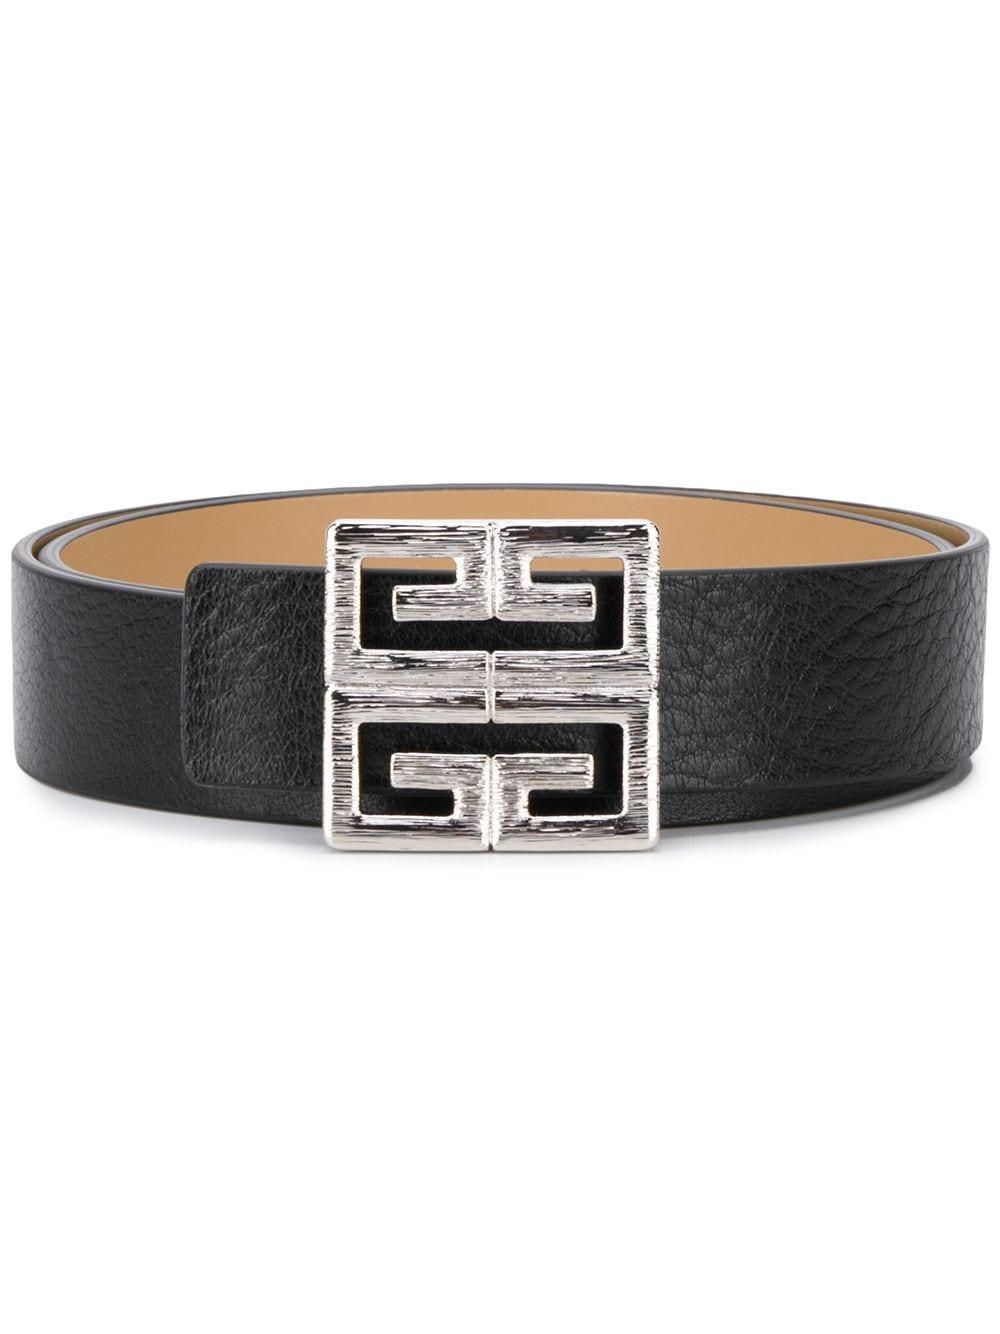 Givenchy Leather 4g Logo Buckle Belt in Black for Men - Save 40% - Lyst